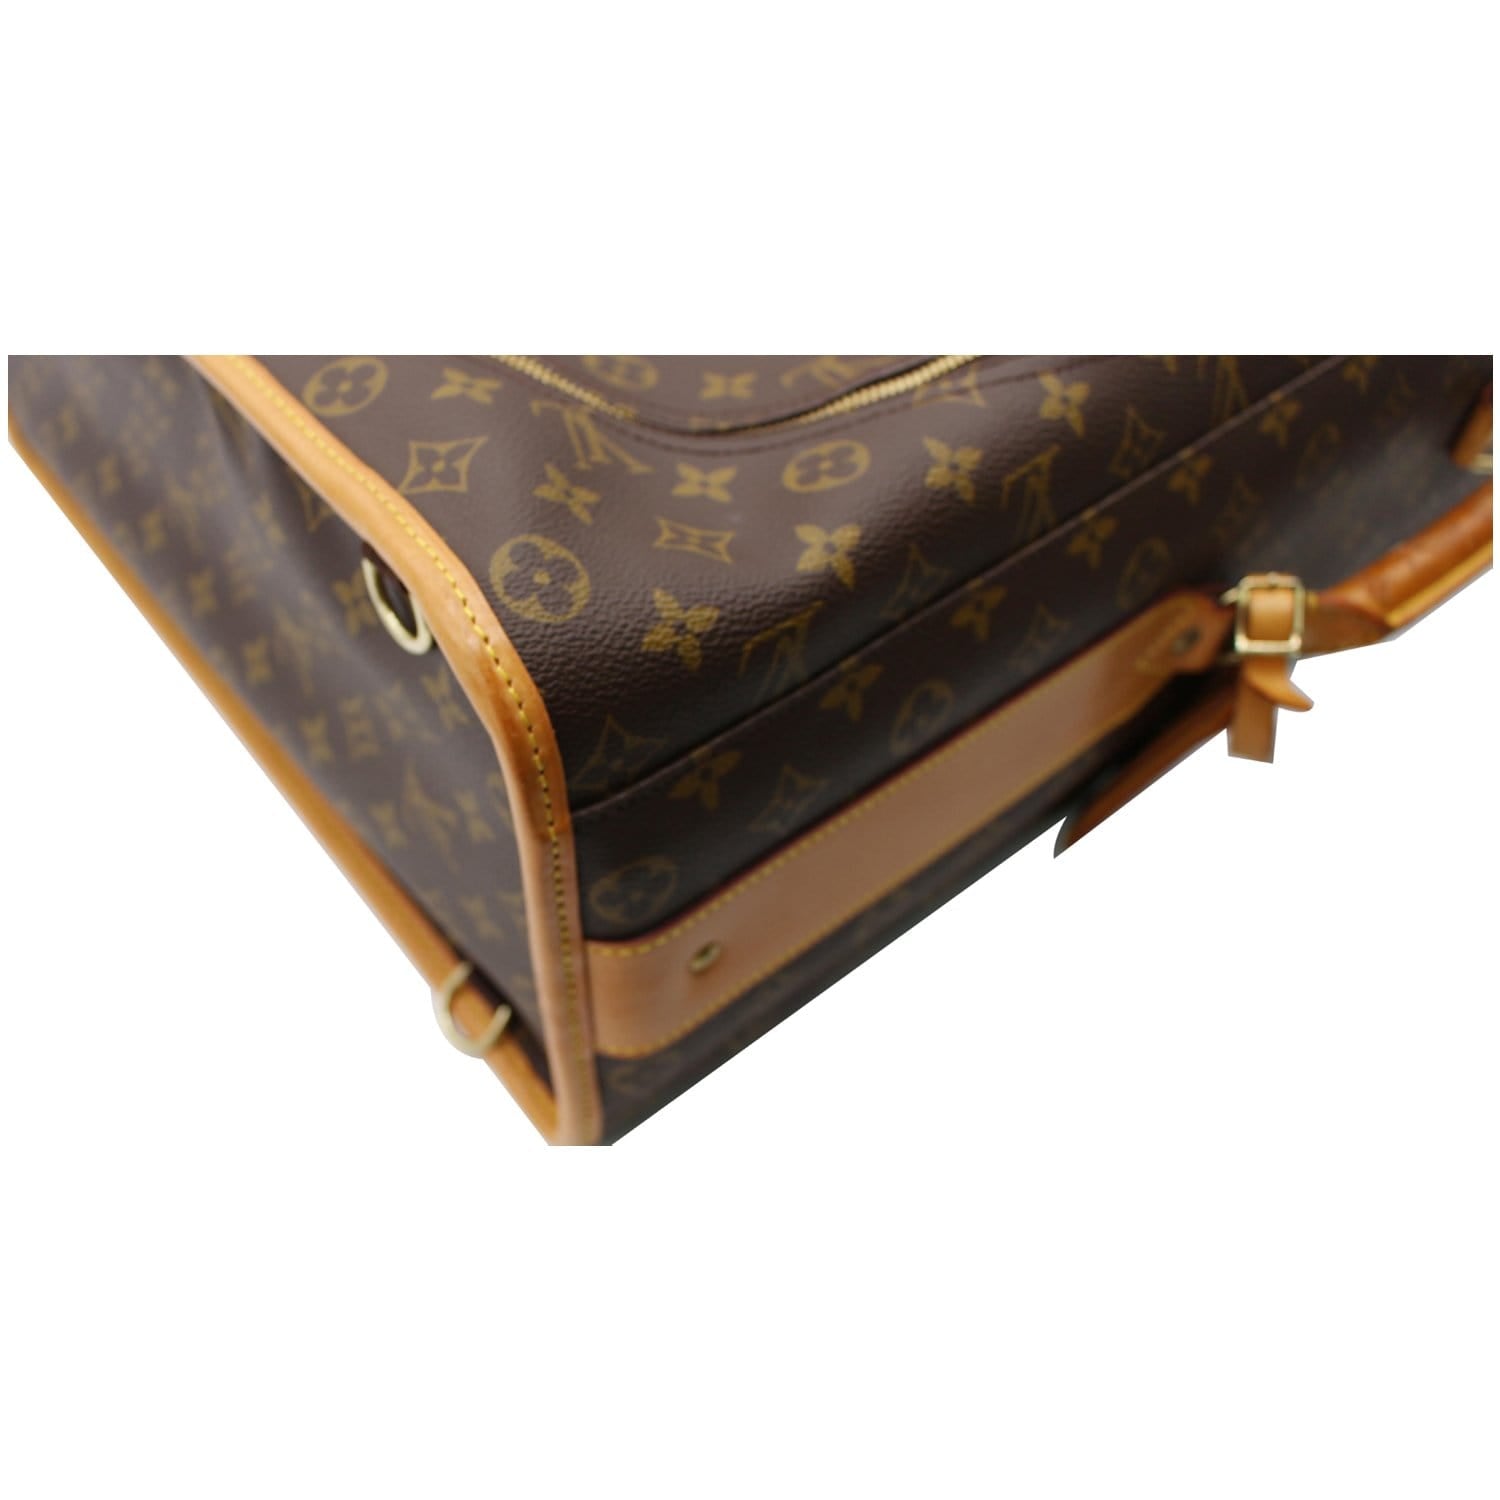 Louis Vuitton brand suitcase